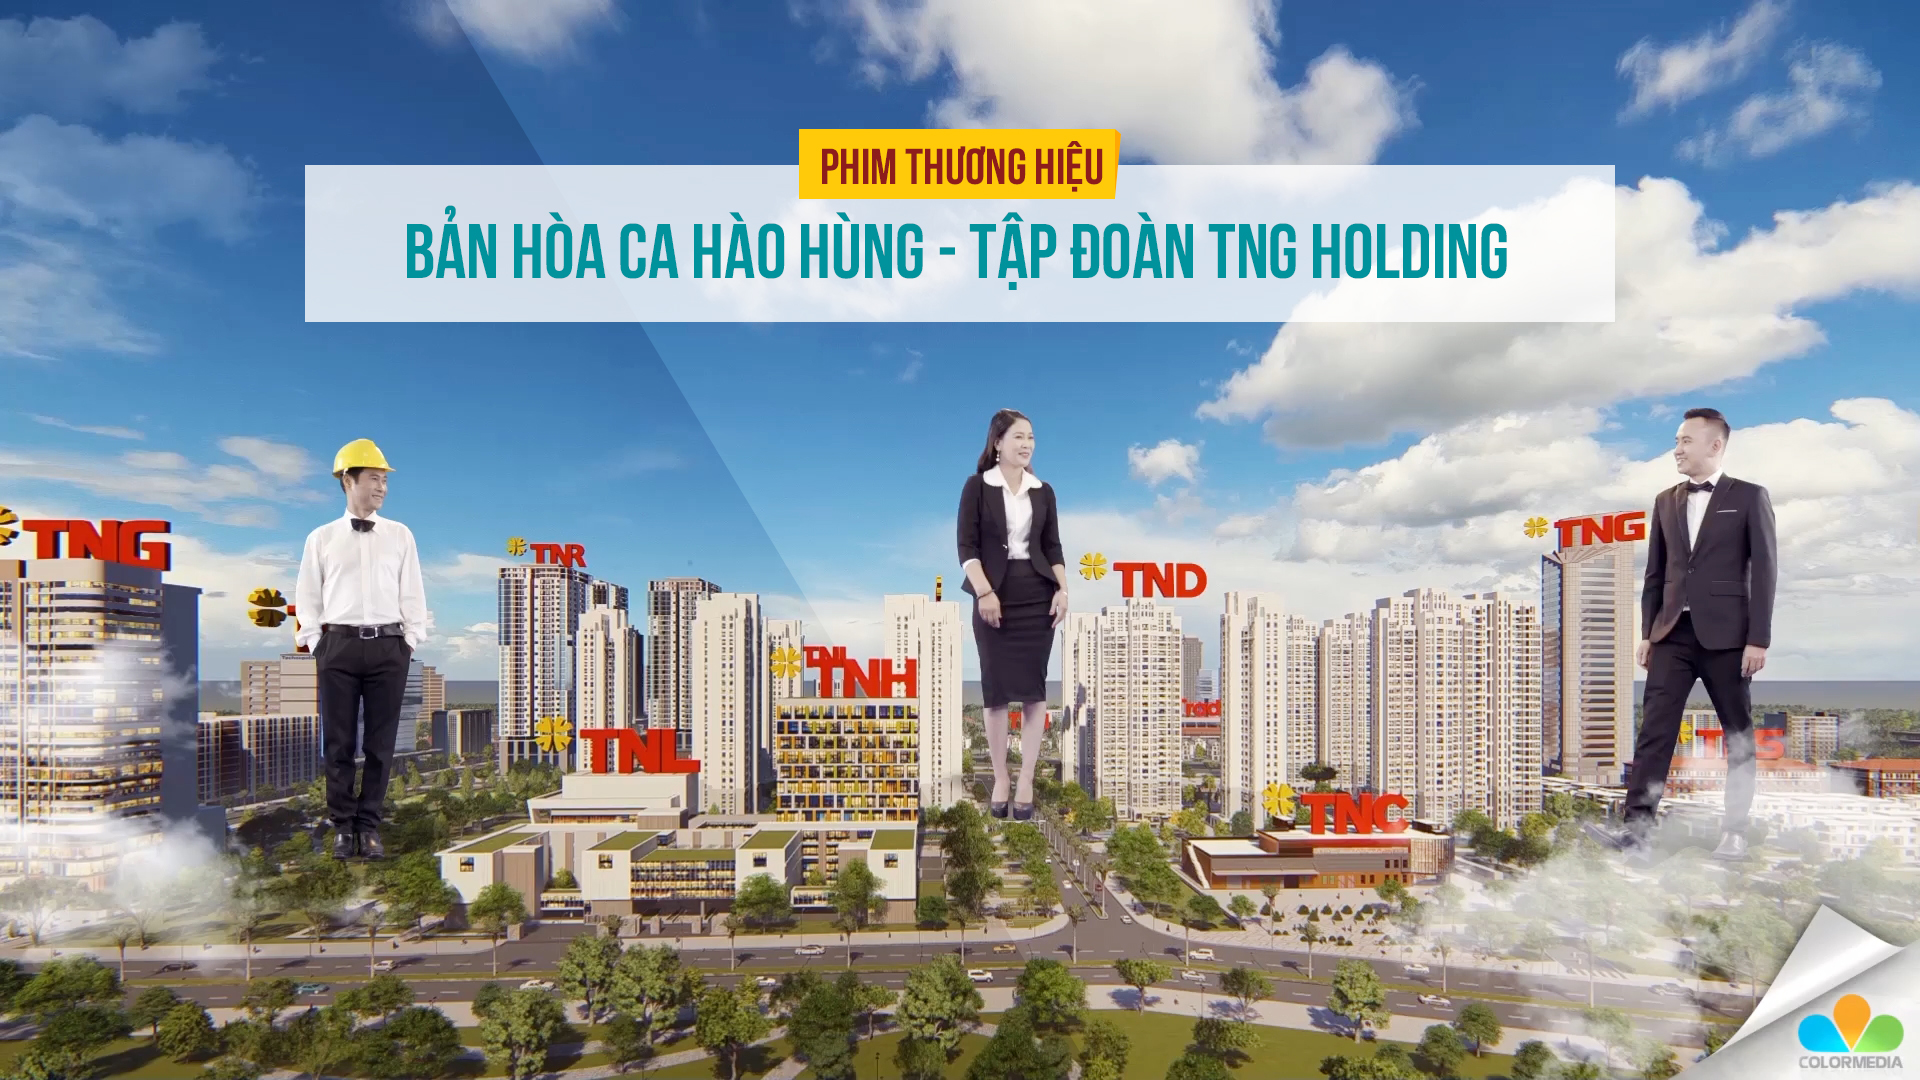 Phim-thuong-hieu-TNR-holding